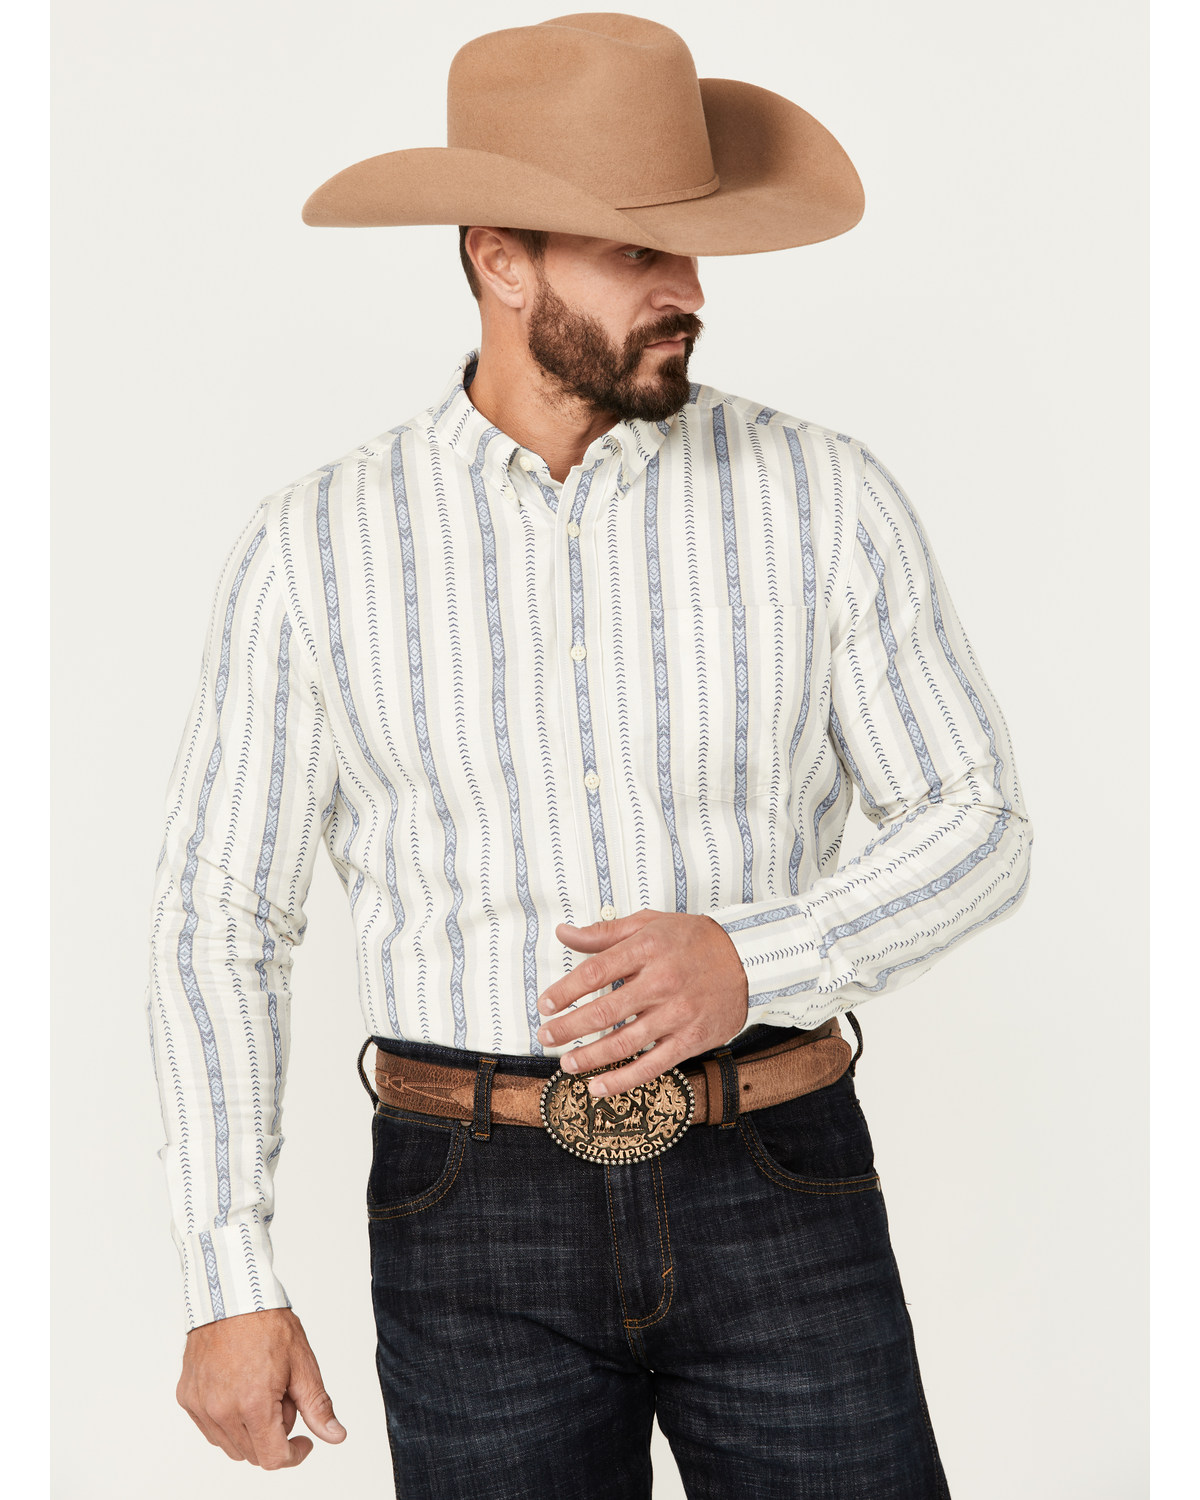 Cody James Men's Southwestern Striped Print Long Sleeve Button-Down Stretch Western Shirt